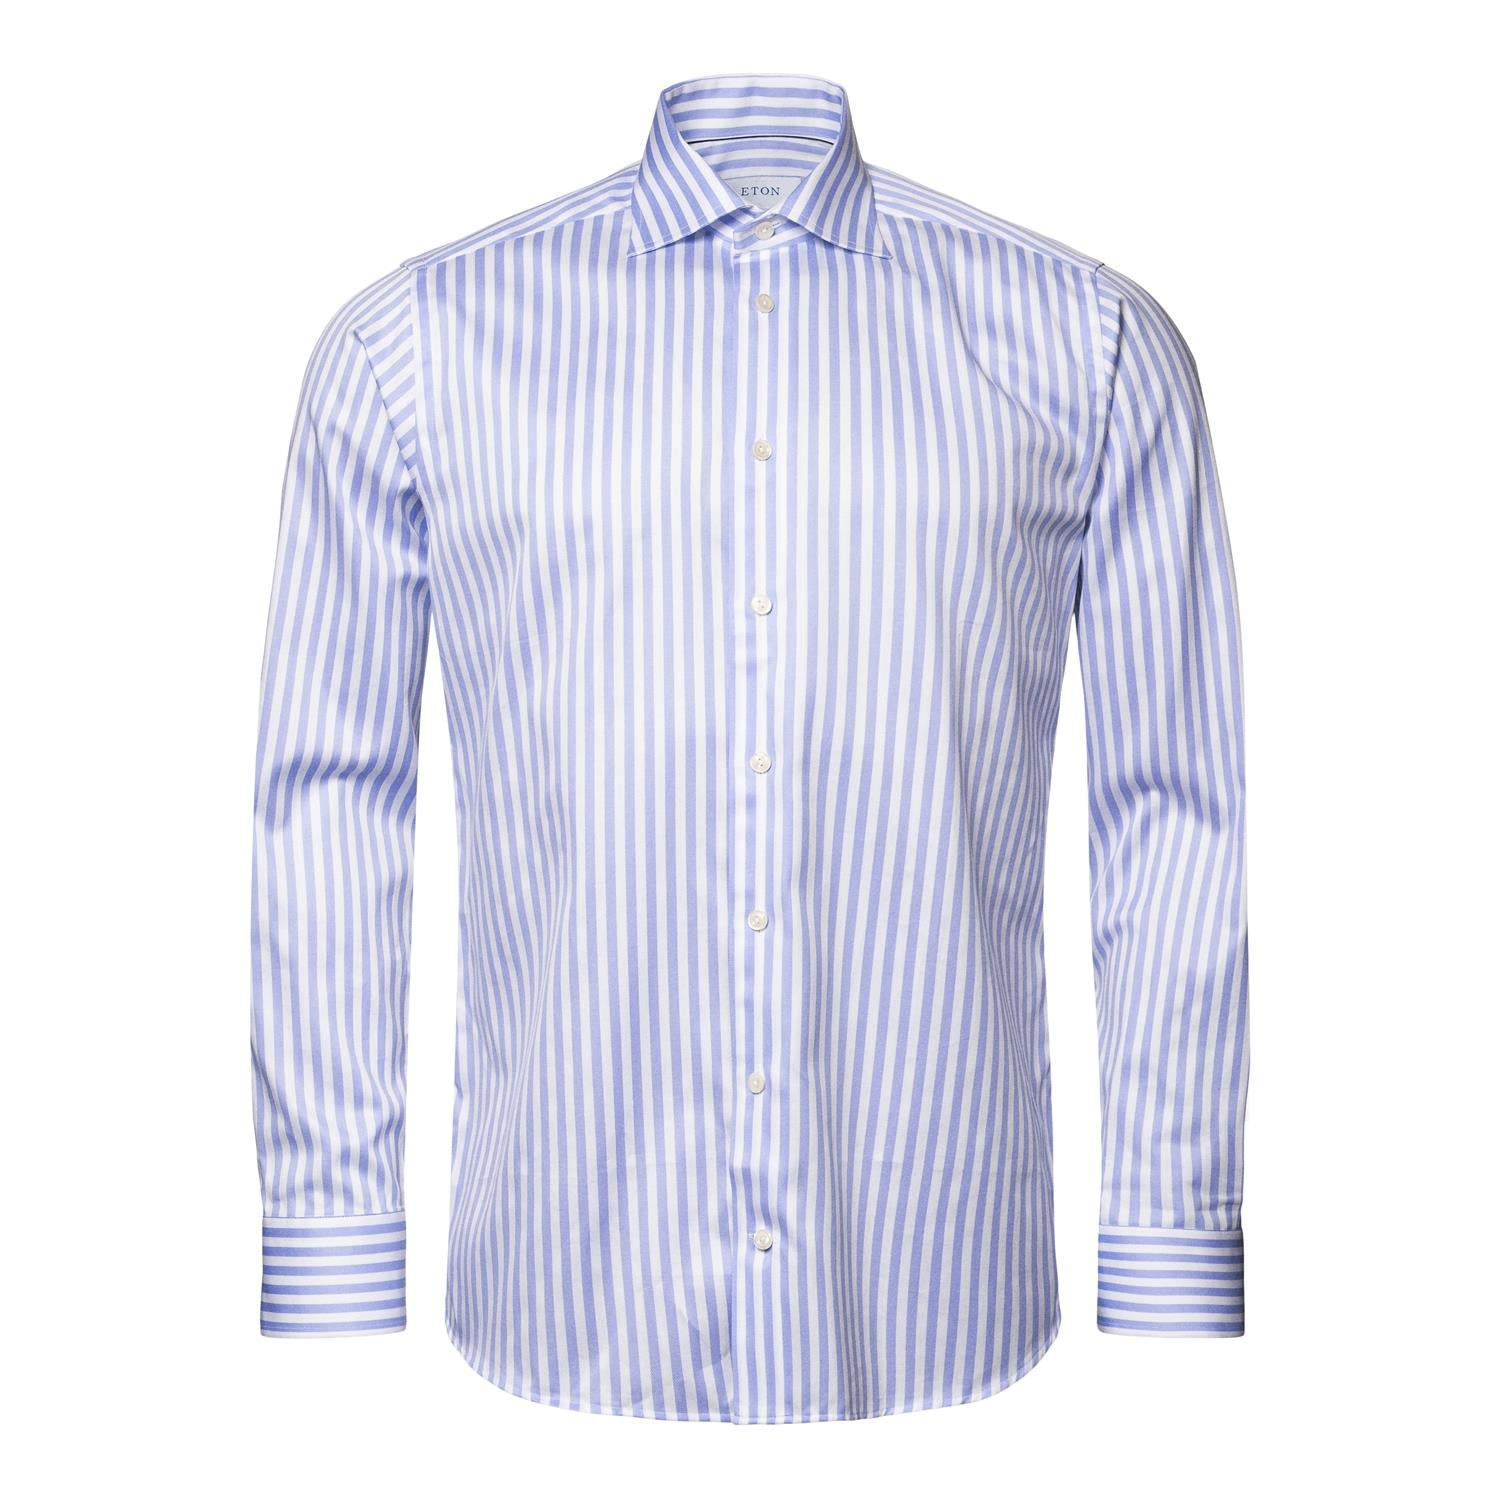 Eton Light Blue Bengal Stripe Signature Twill Shirt Skjorte Lyseblå Striper - [shop.name]